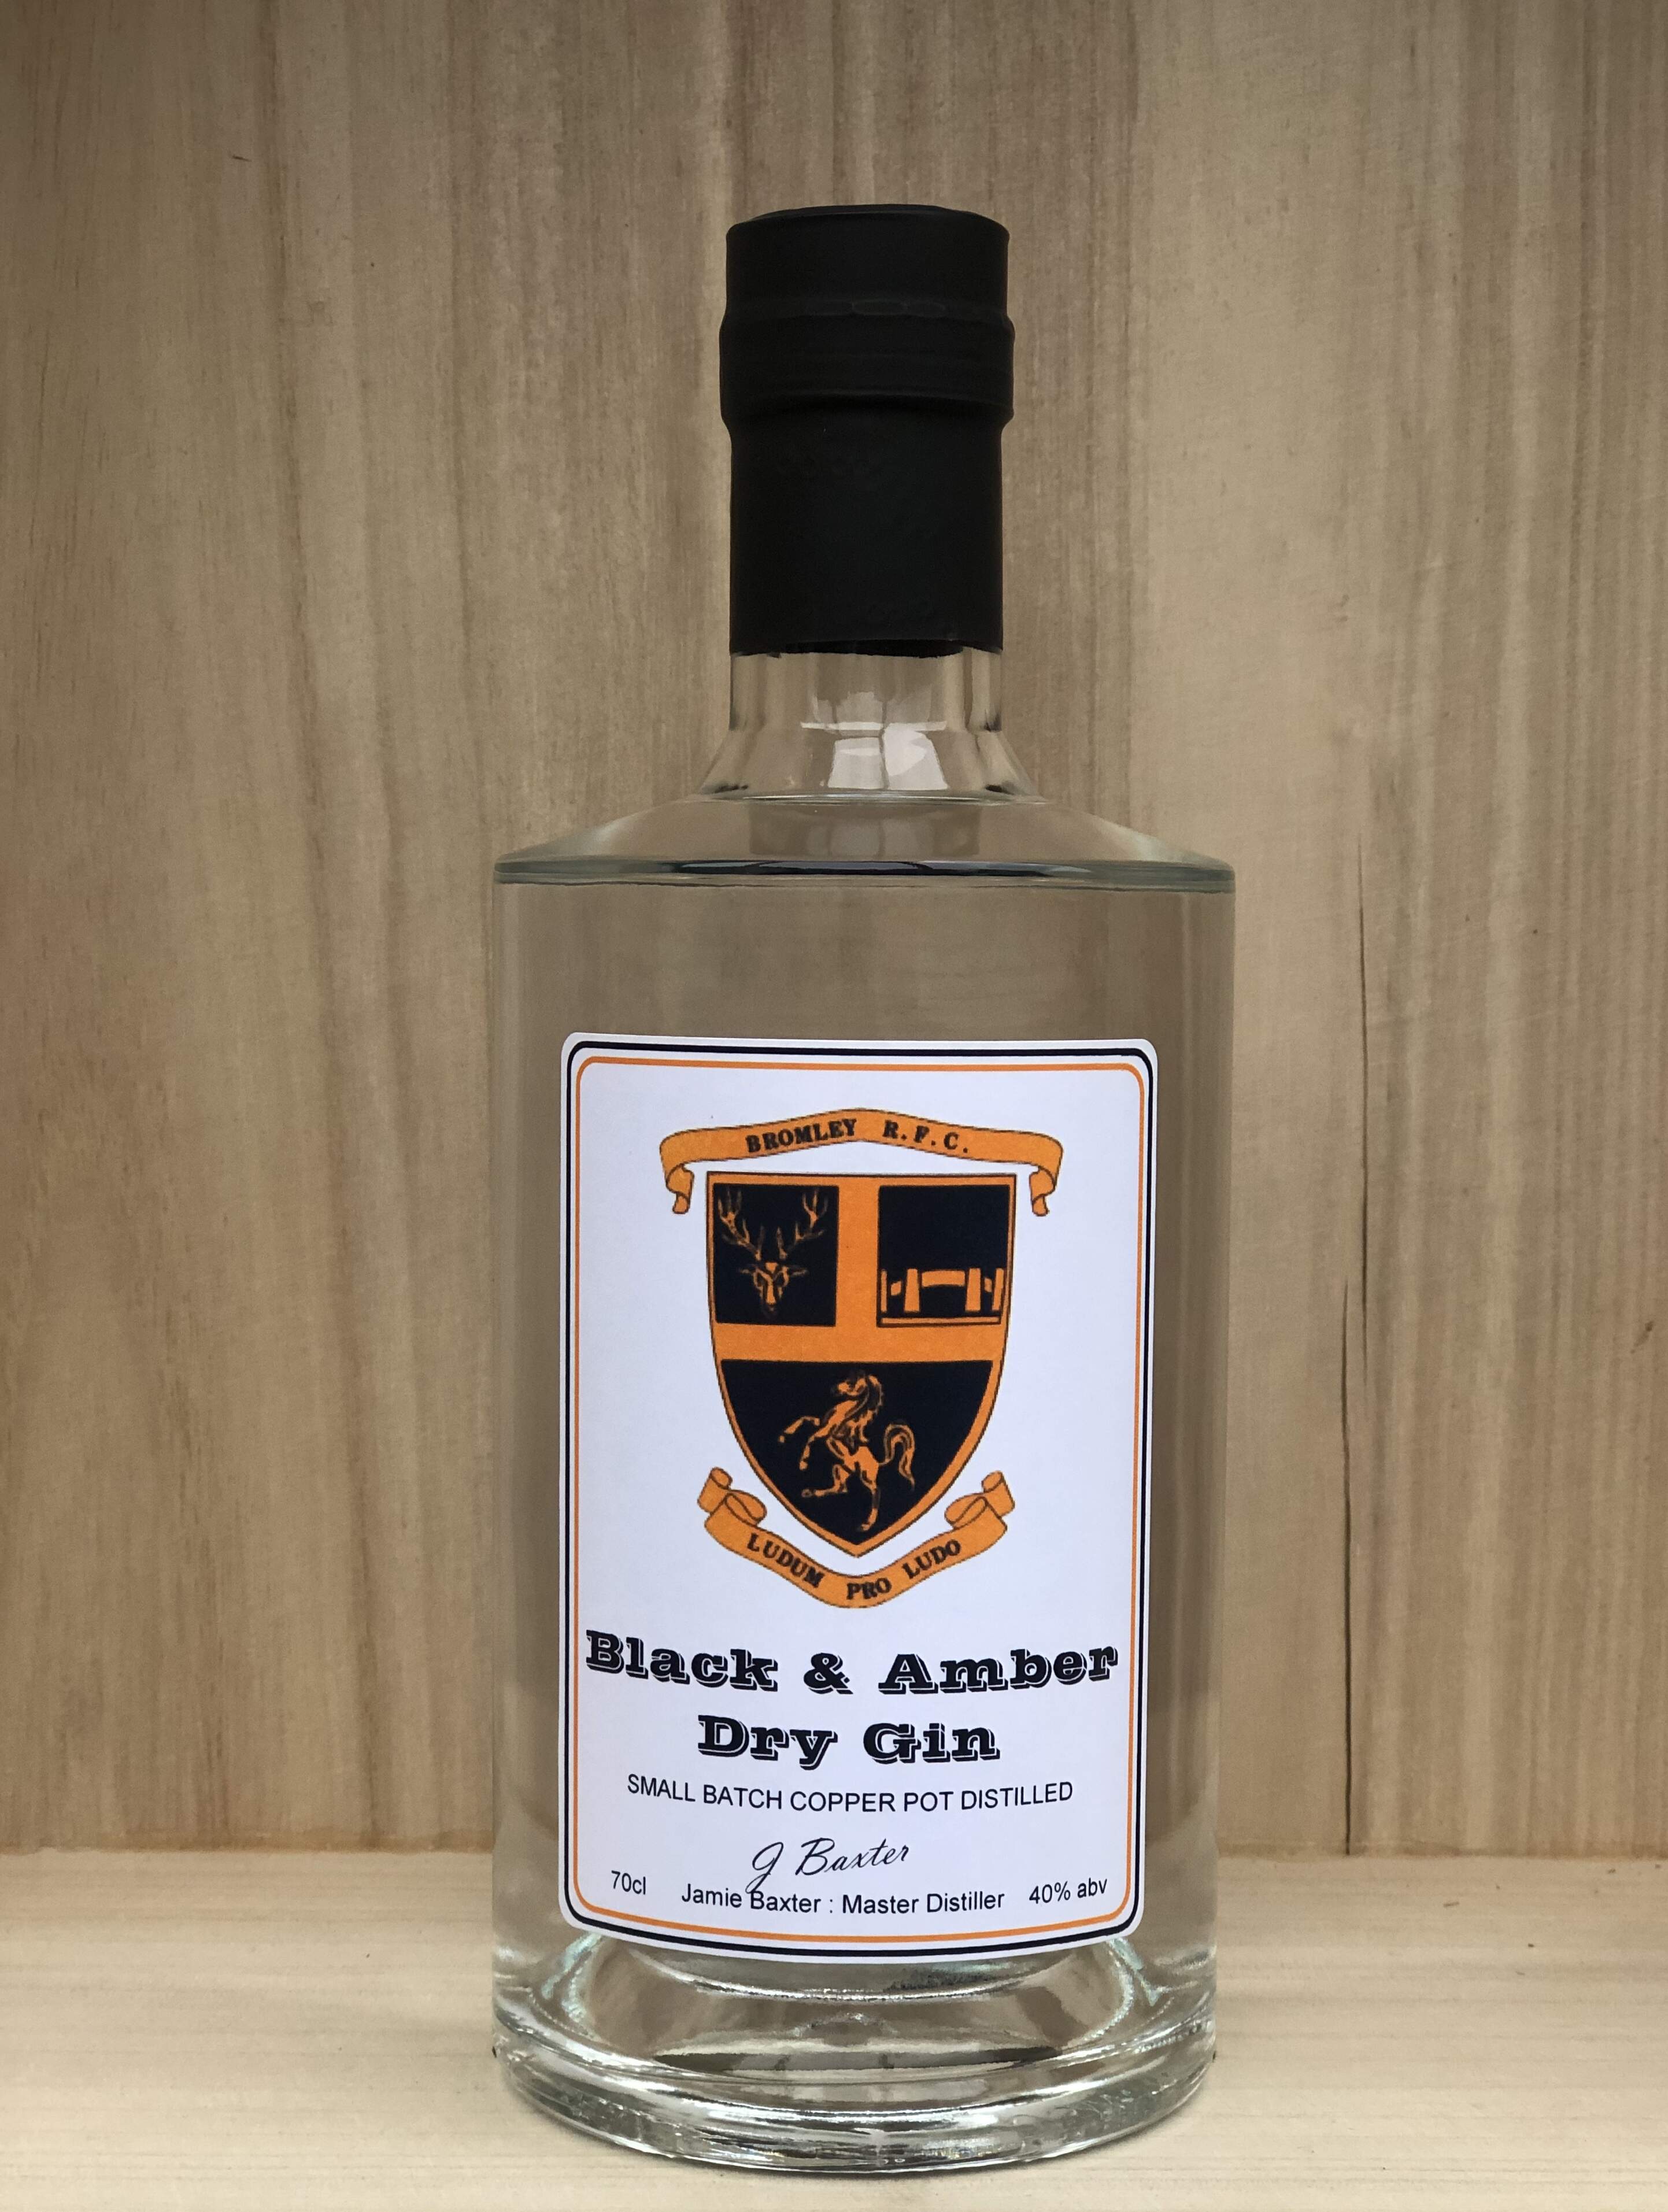 Bromley R.F.C. 'Black & Amber' Dry Gin